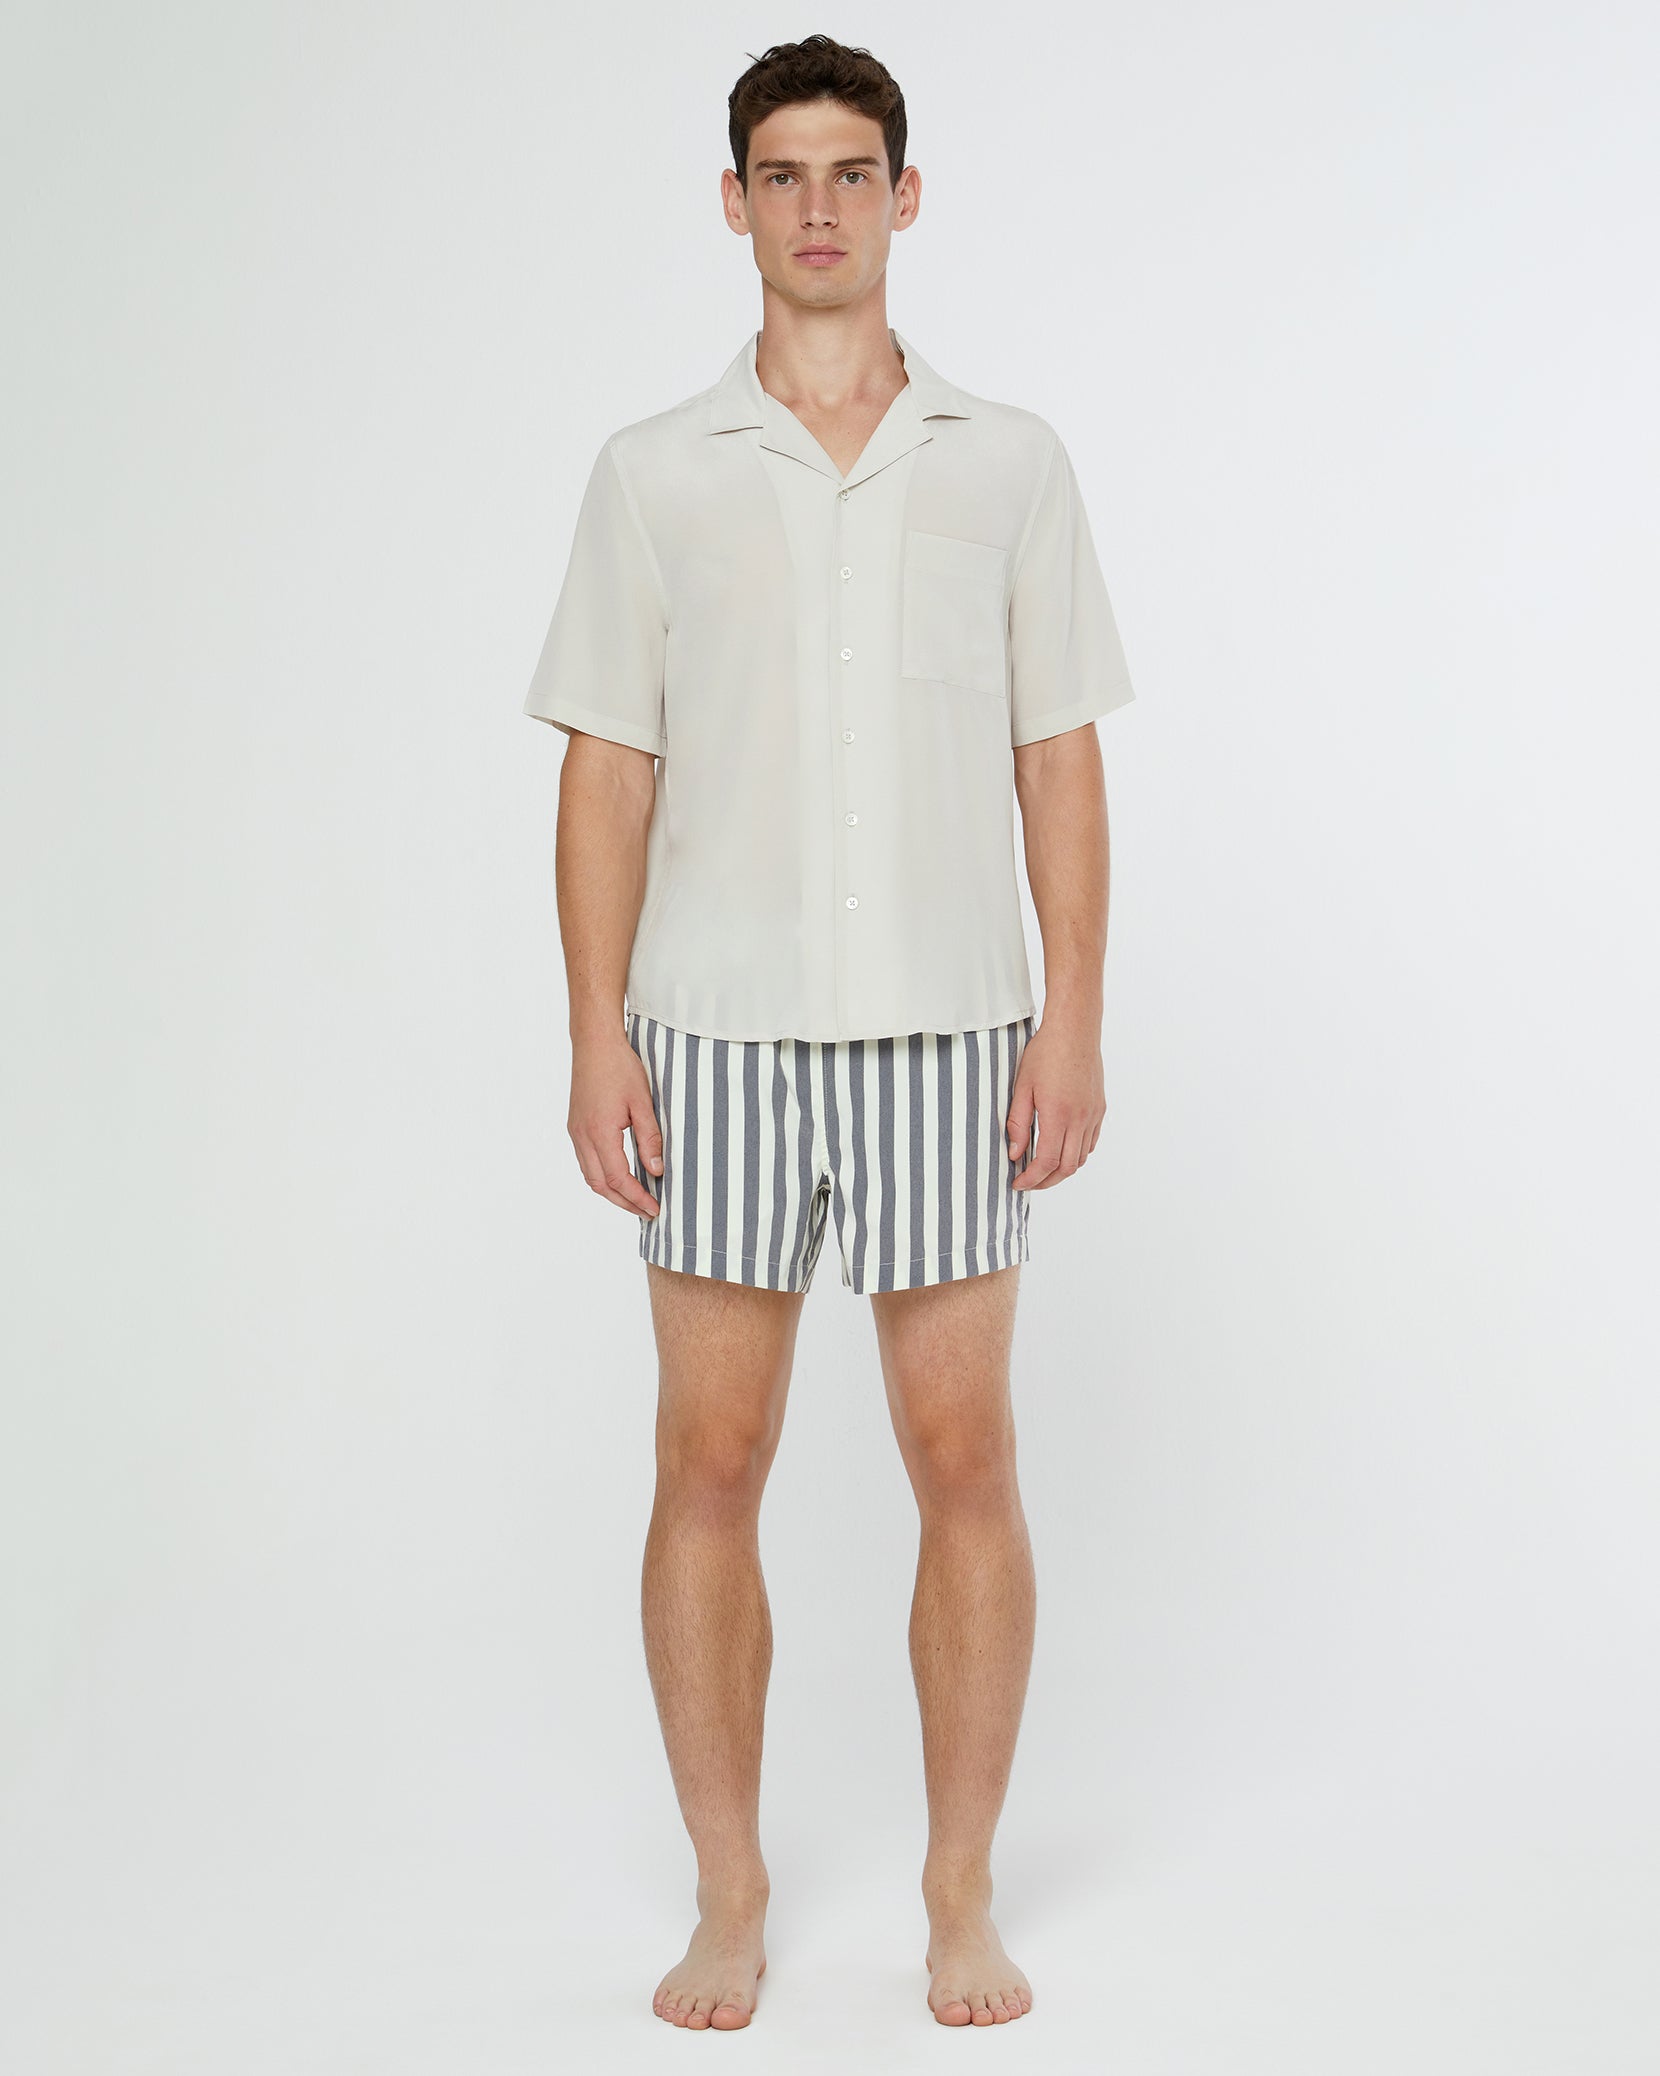 Men's Beach Outfits | Swim Trunks & Shirts – onia